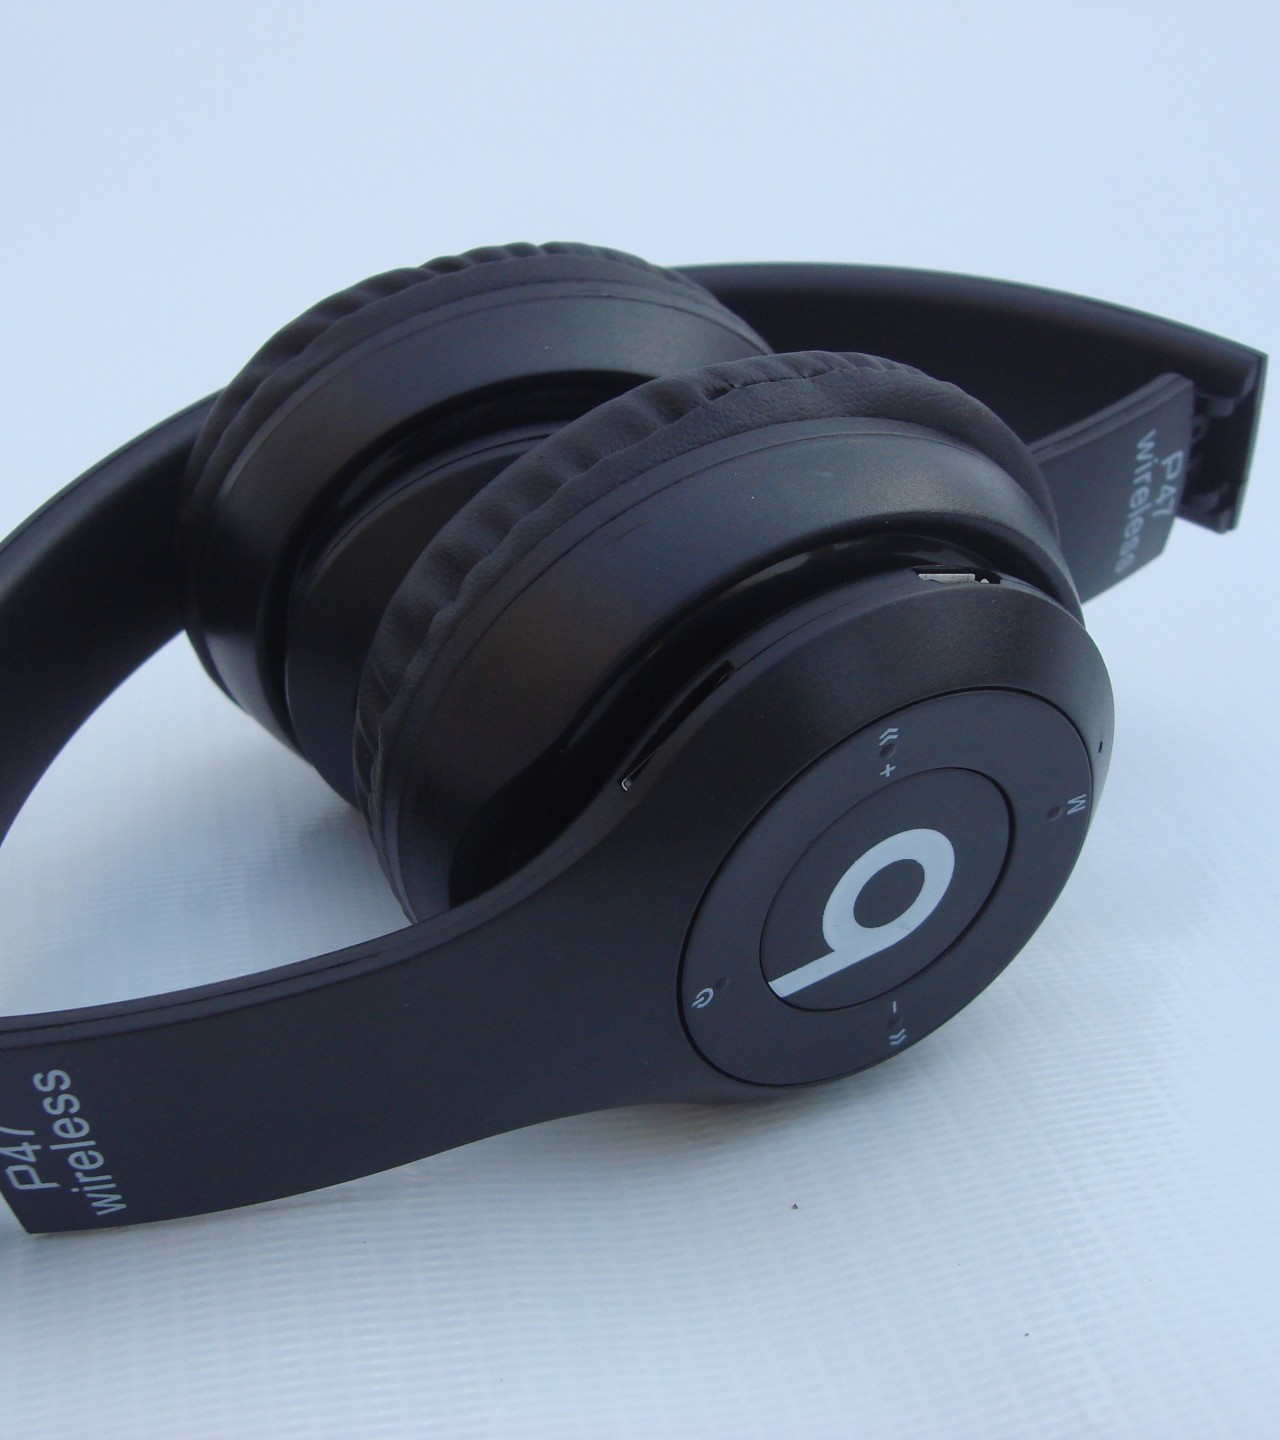 P47 Bluetooth Headphones - Black